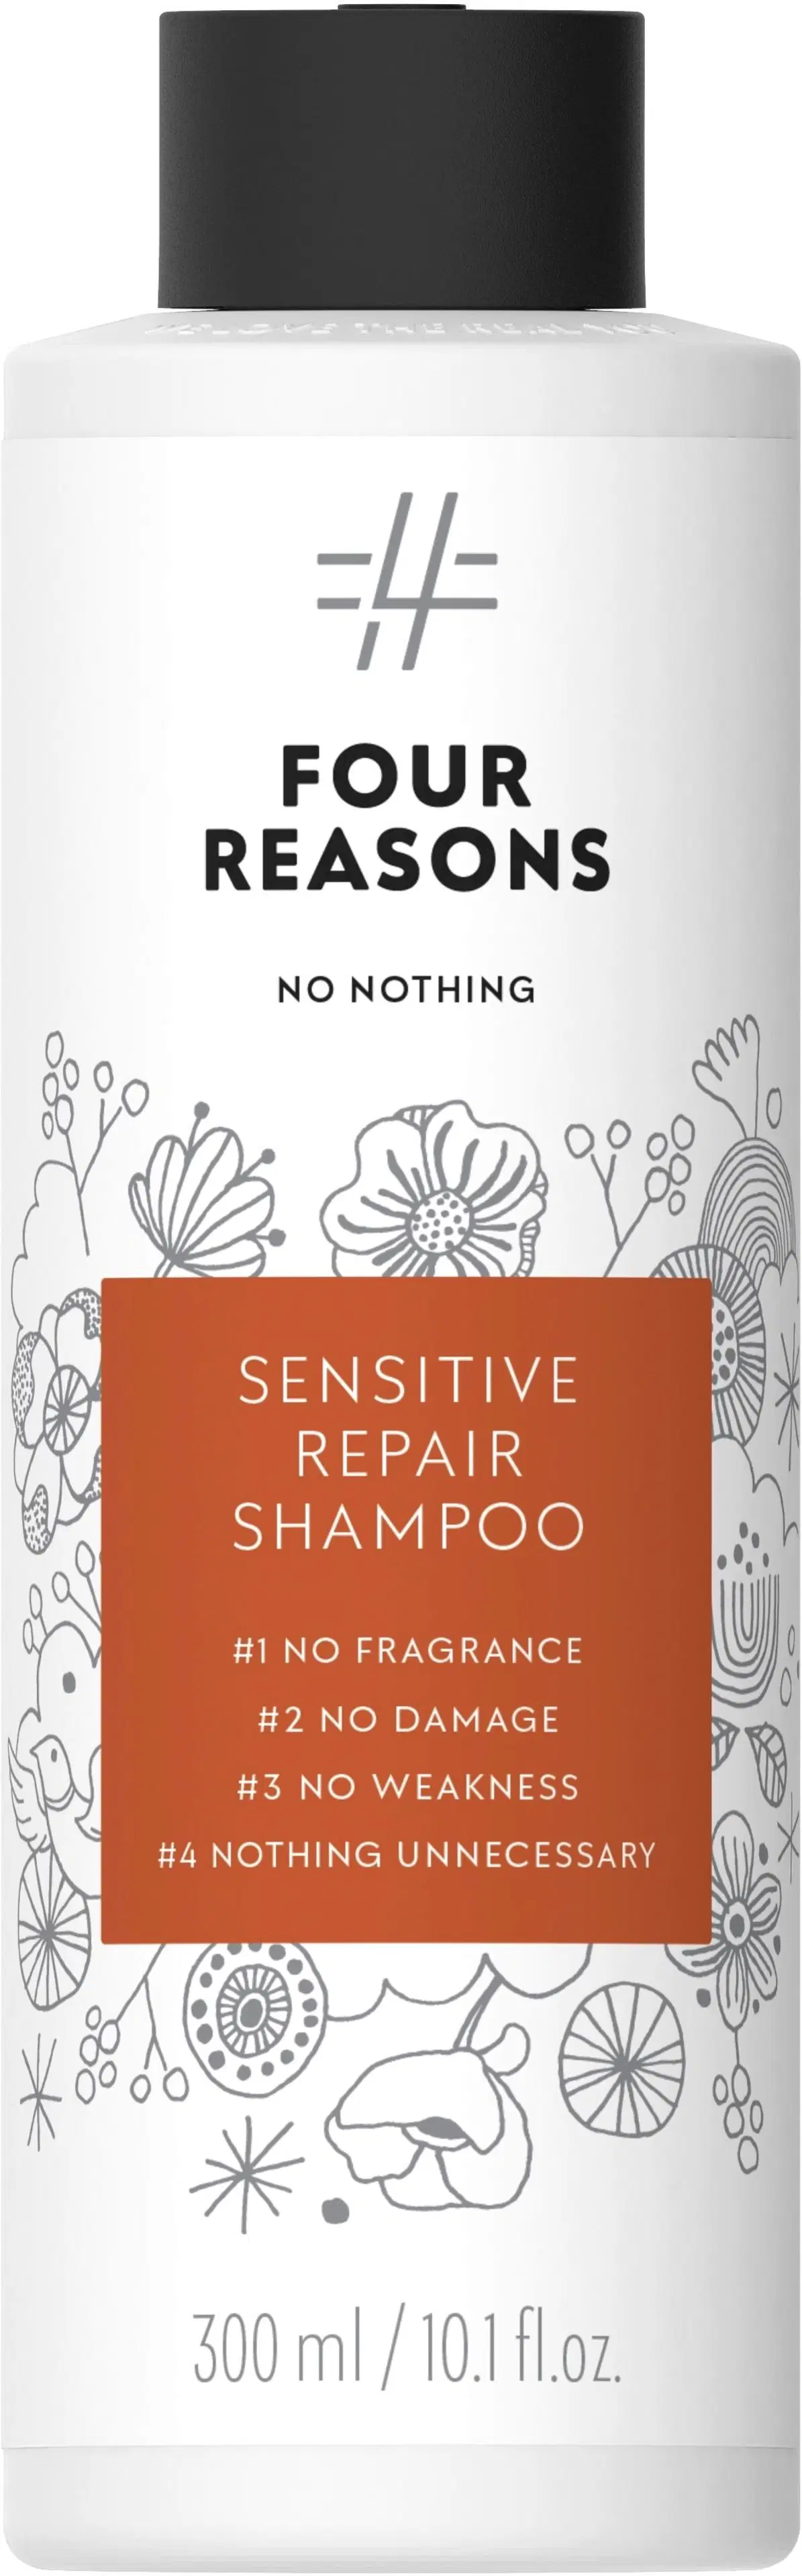 Four Reasons No nothing Sensitive Repair Shampoo 300 ml